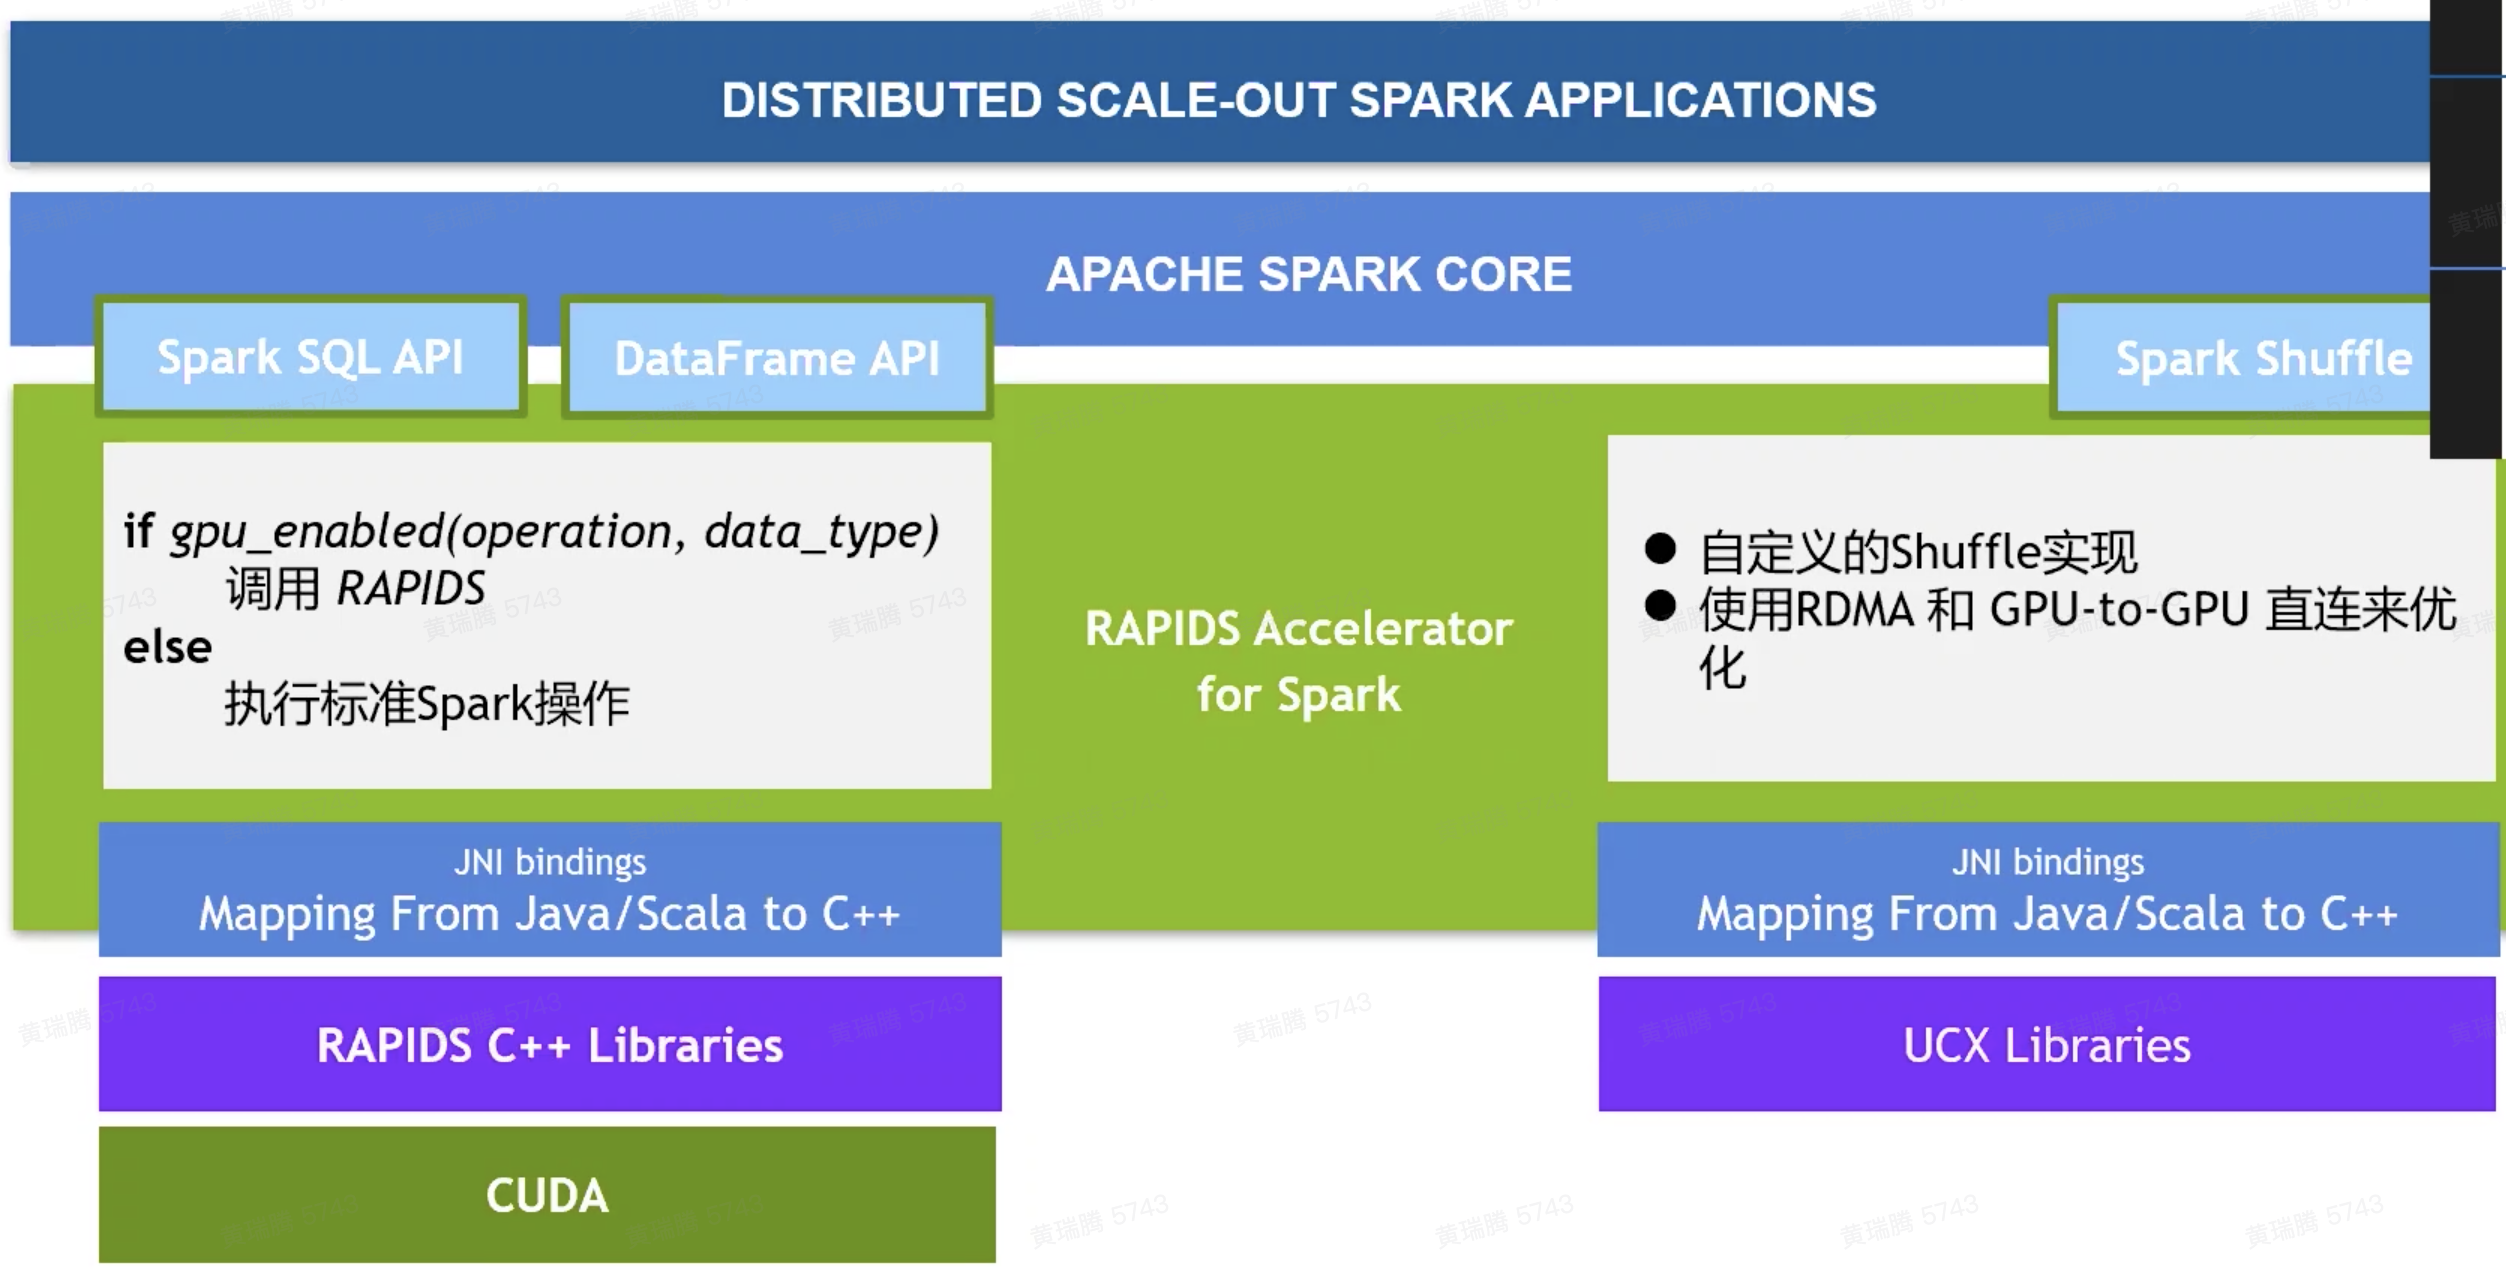 RAPIDS accelerator for Apache Spark